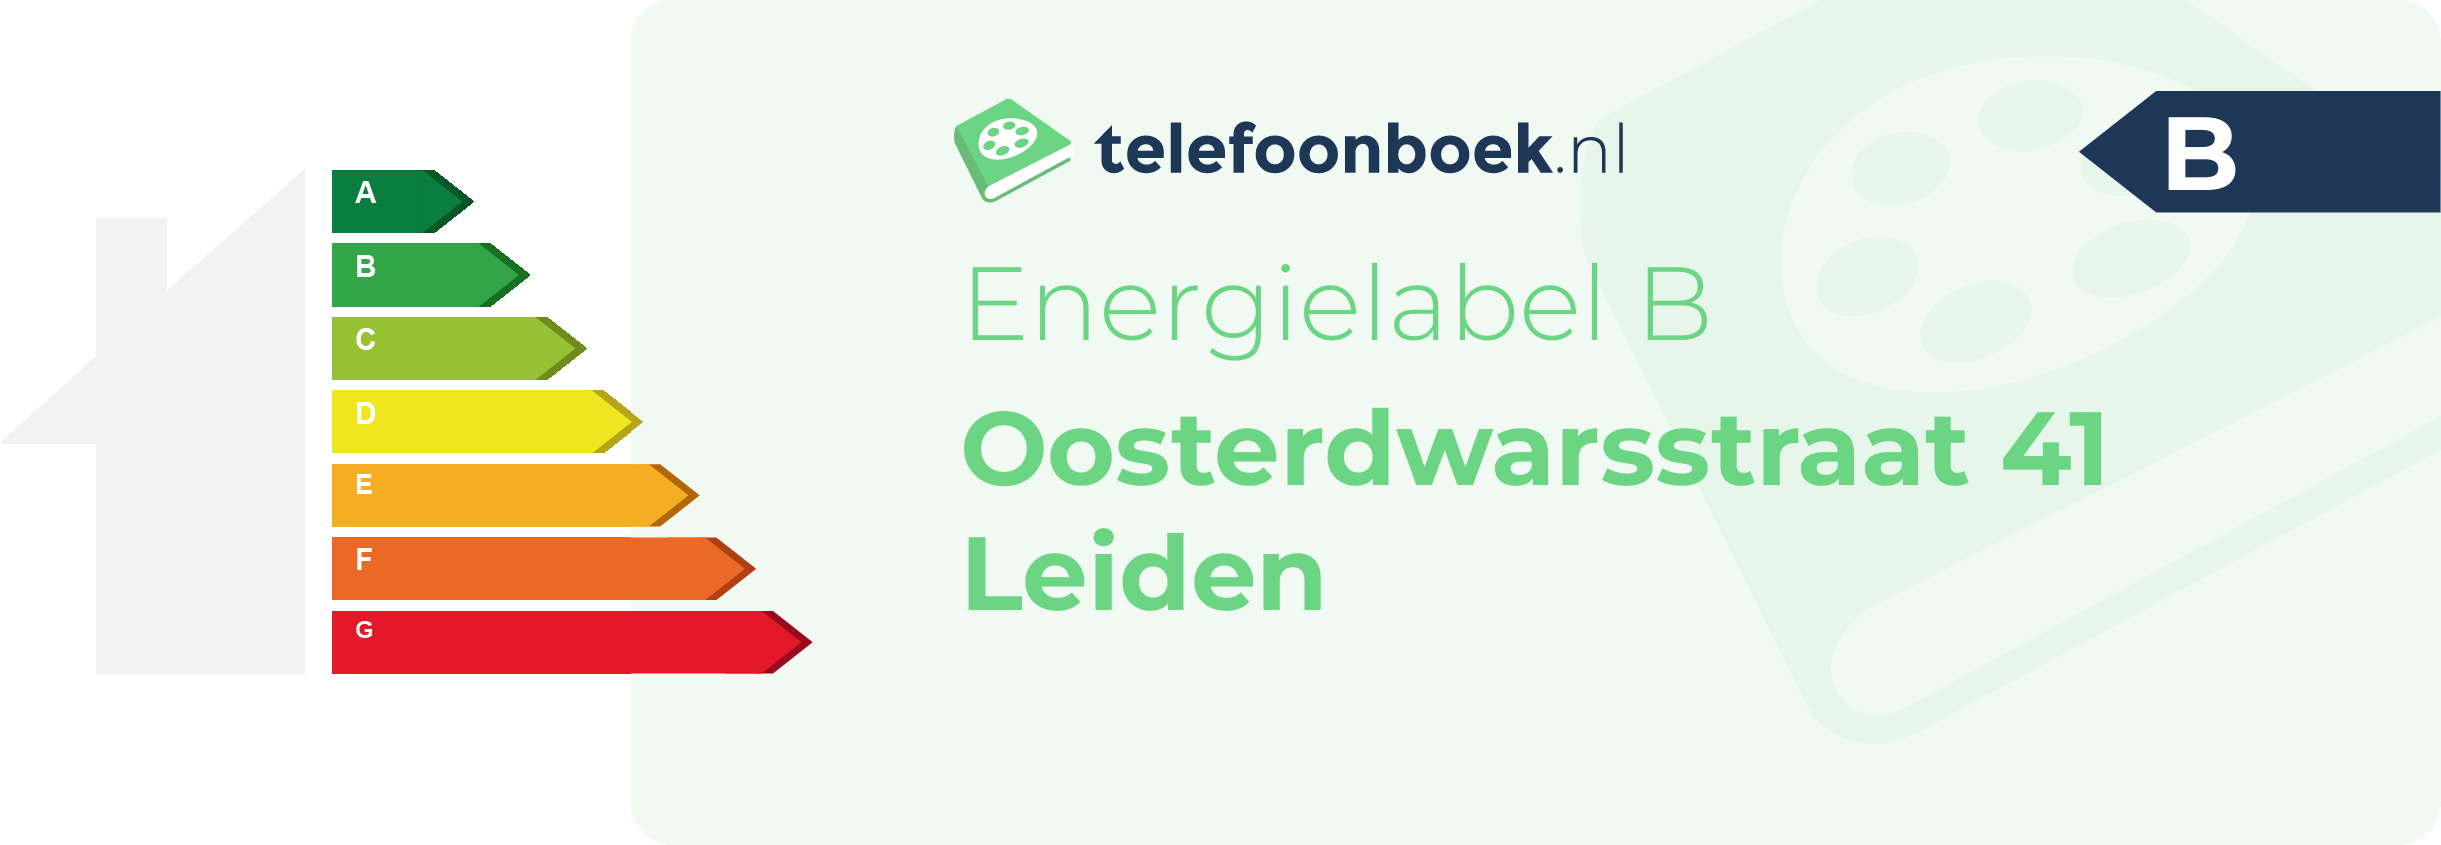 Energielabel Oosterdwarsstraat 41 Leiden